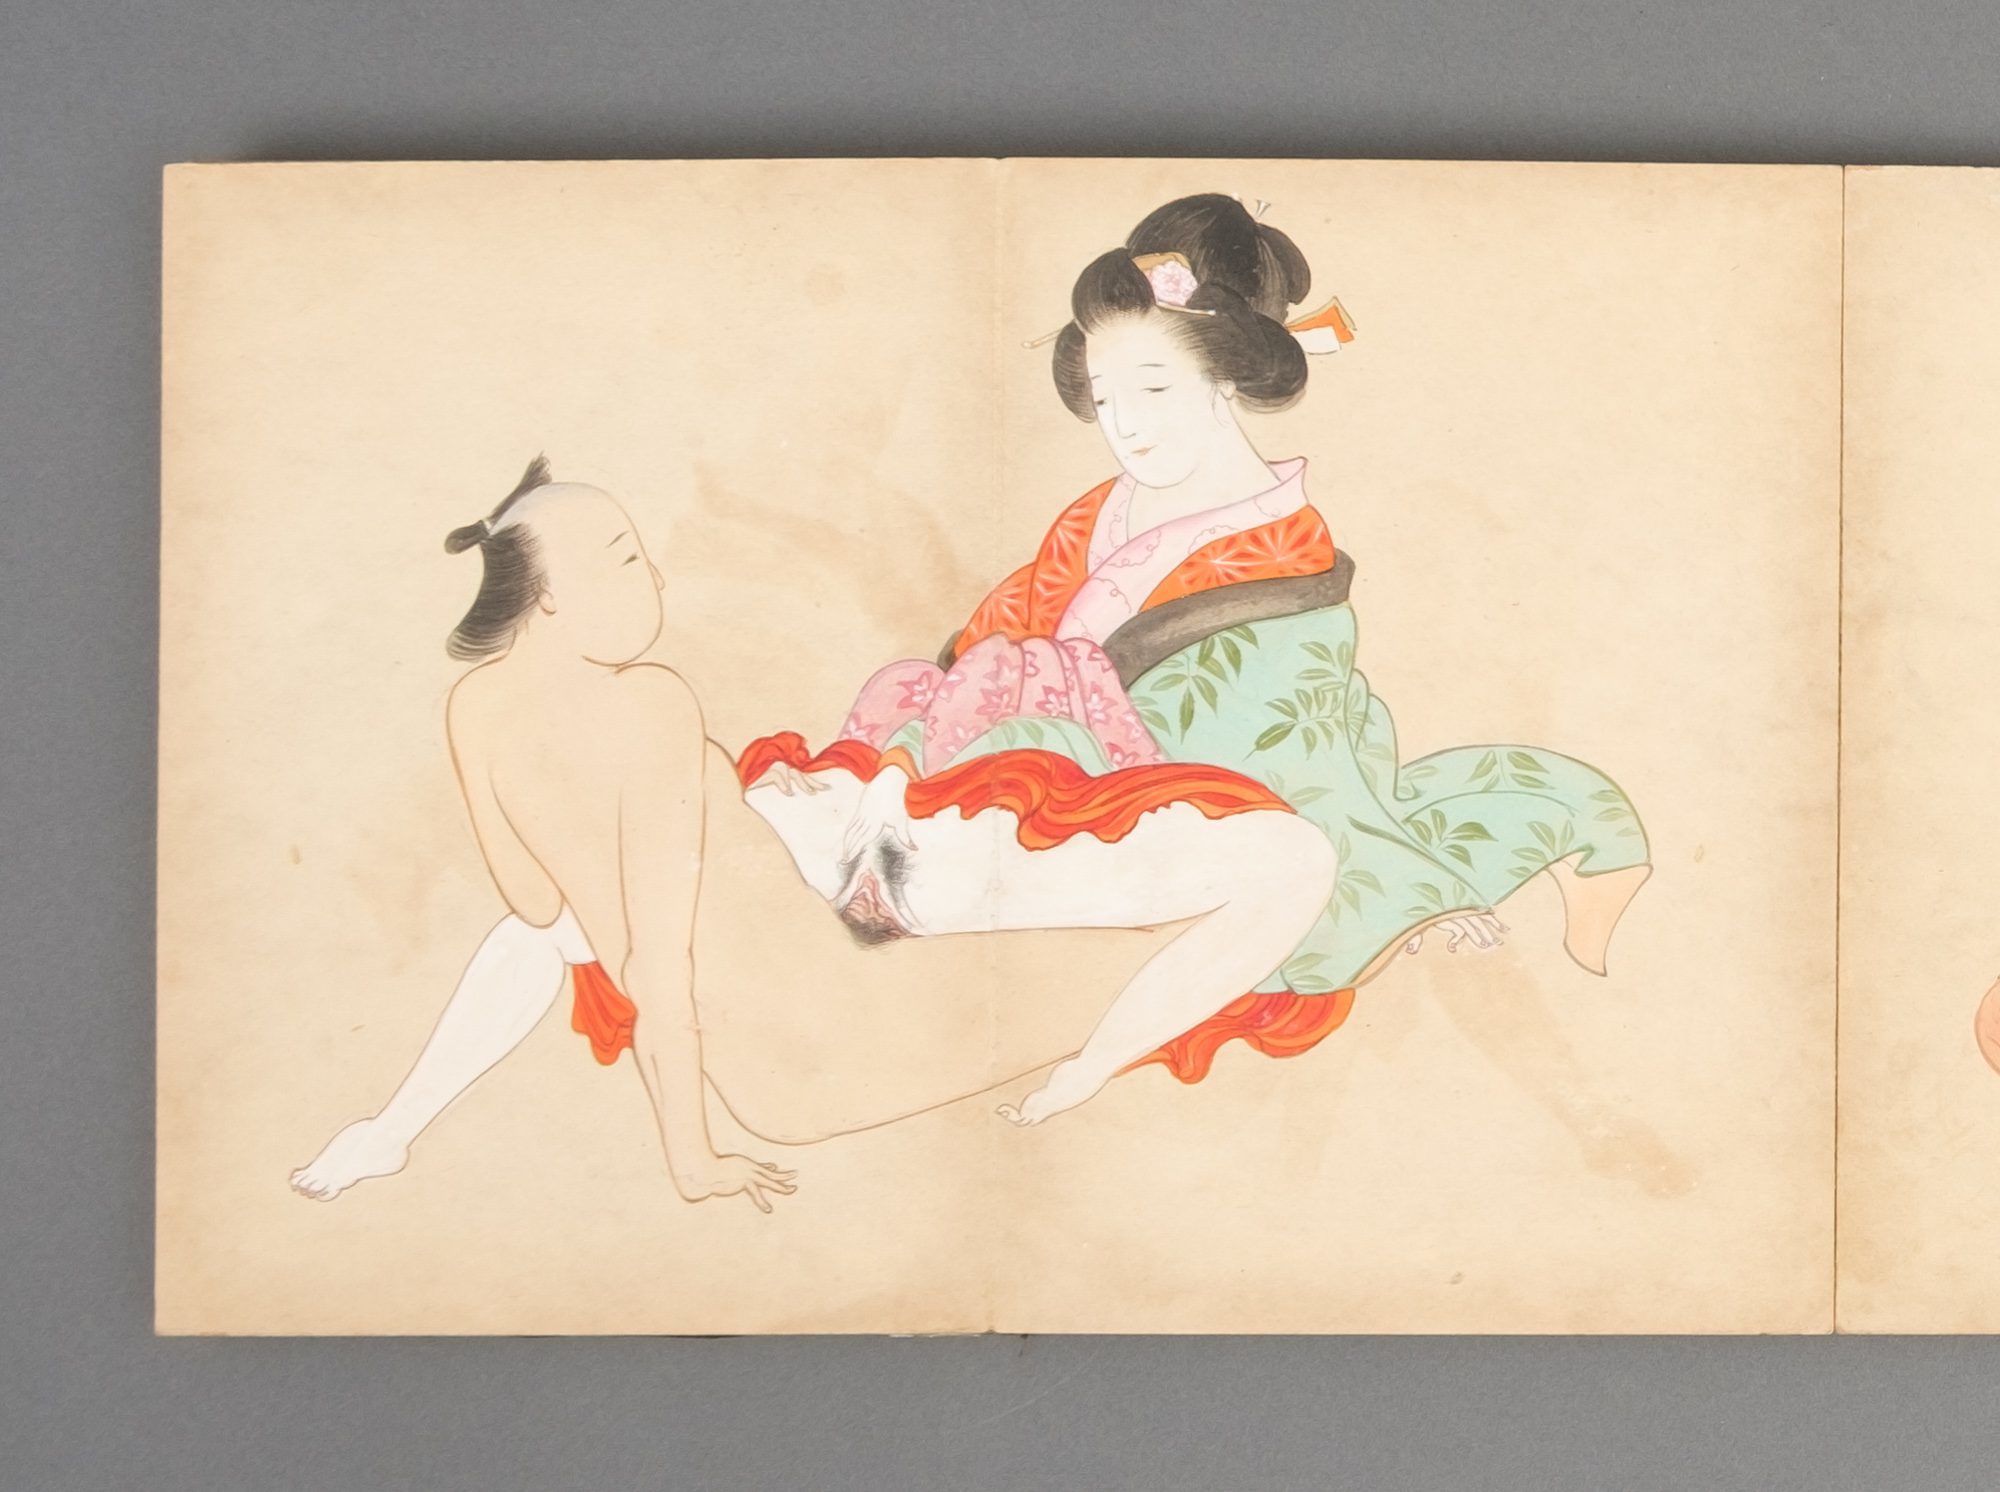 A JAPANESE EROTIC BOOK “SHUNGA”, 1912-1926 (TAISHO PERIOD) - Image 16 of 29